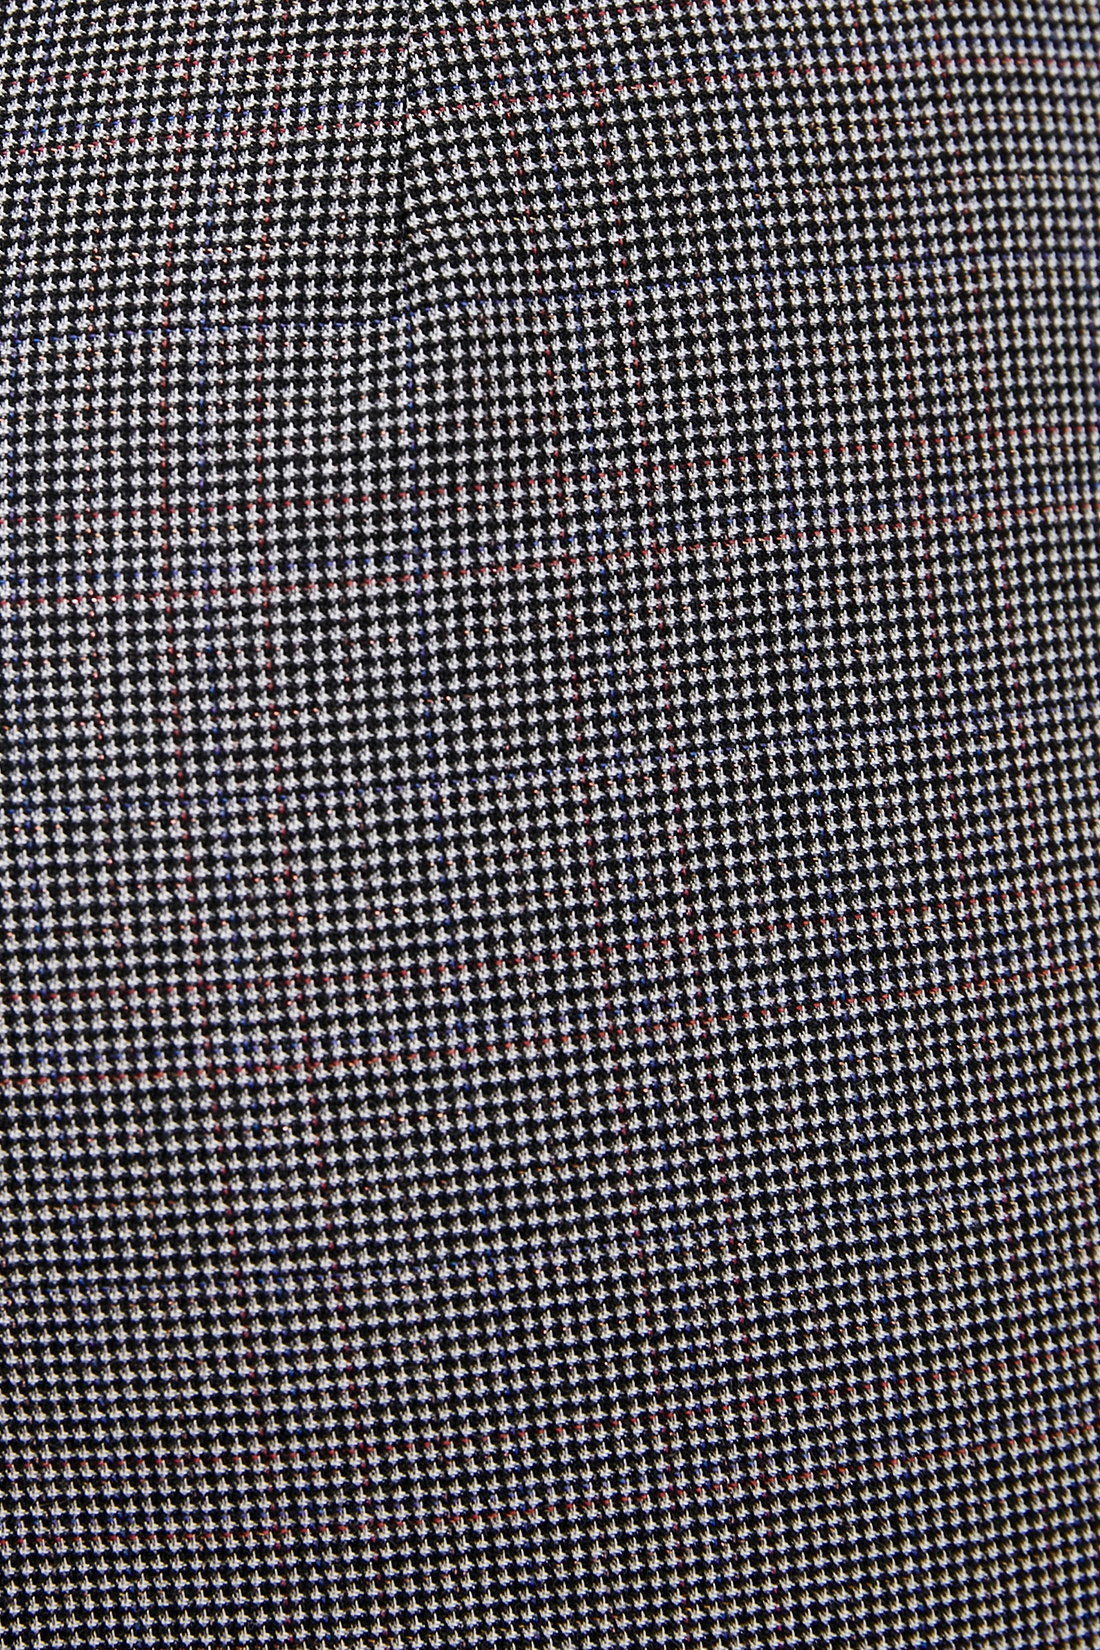 Брюки в мелкую клетку (арт. baon B299502), размер M, цвет dark grey checked#серый Брюки в мелкую клетку (арт. baon B299502) - фото 3